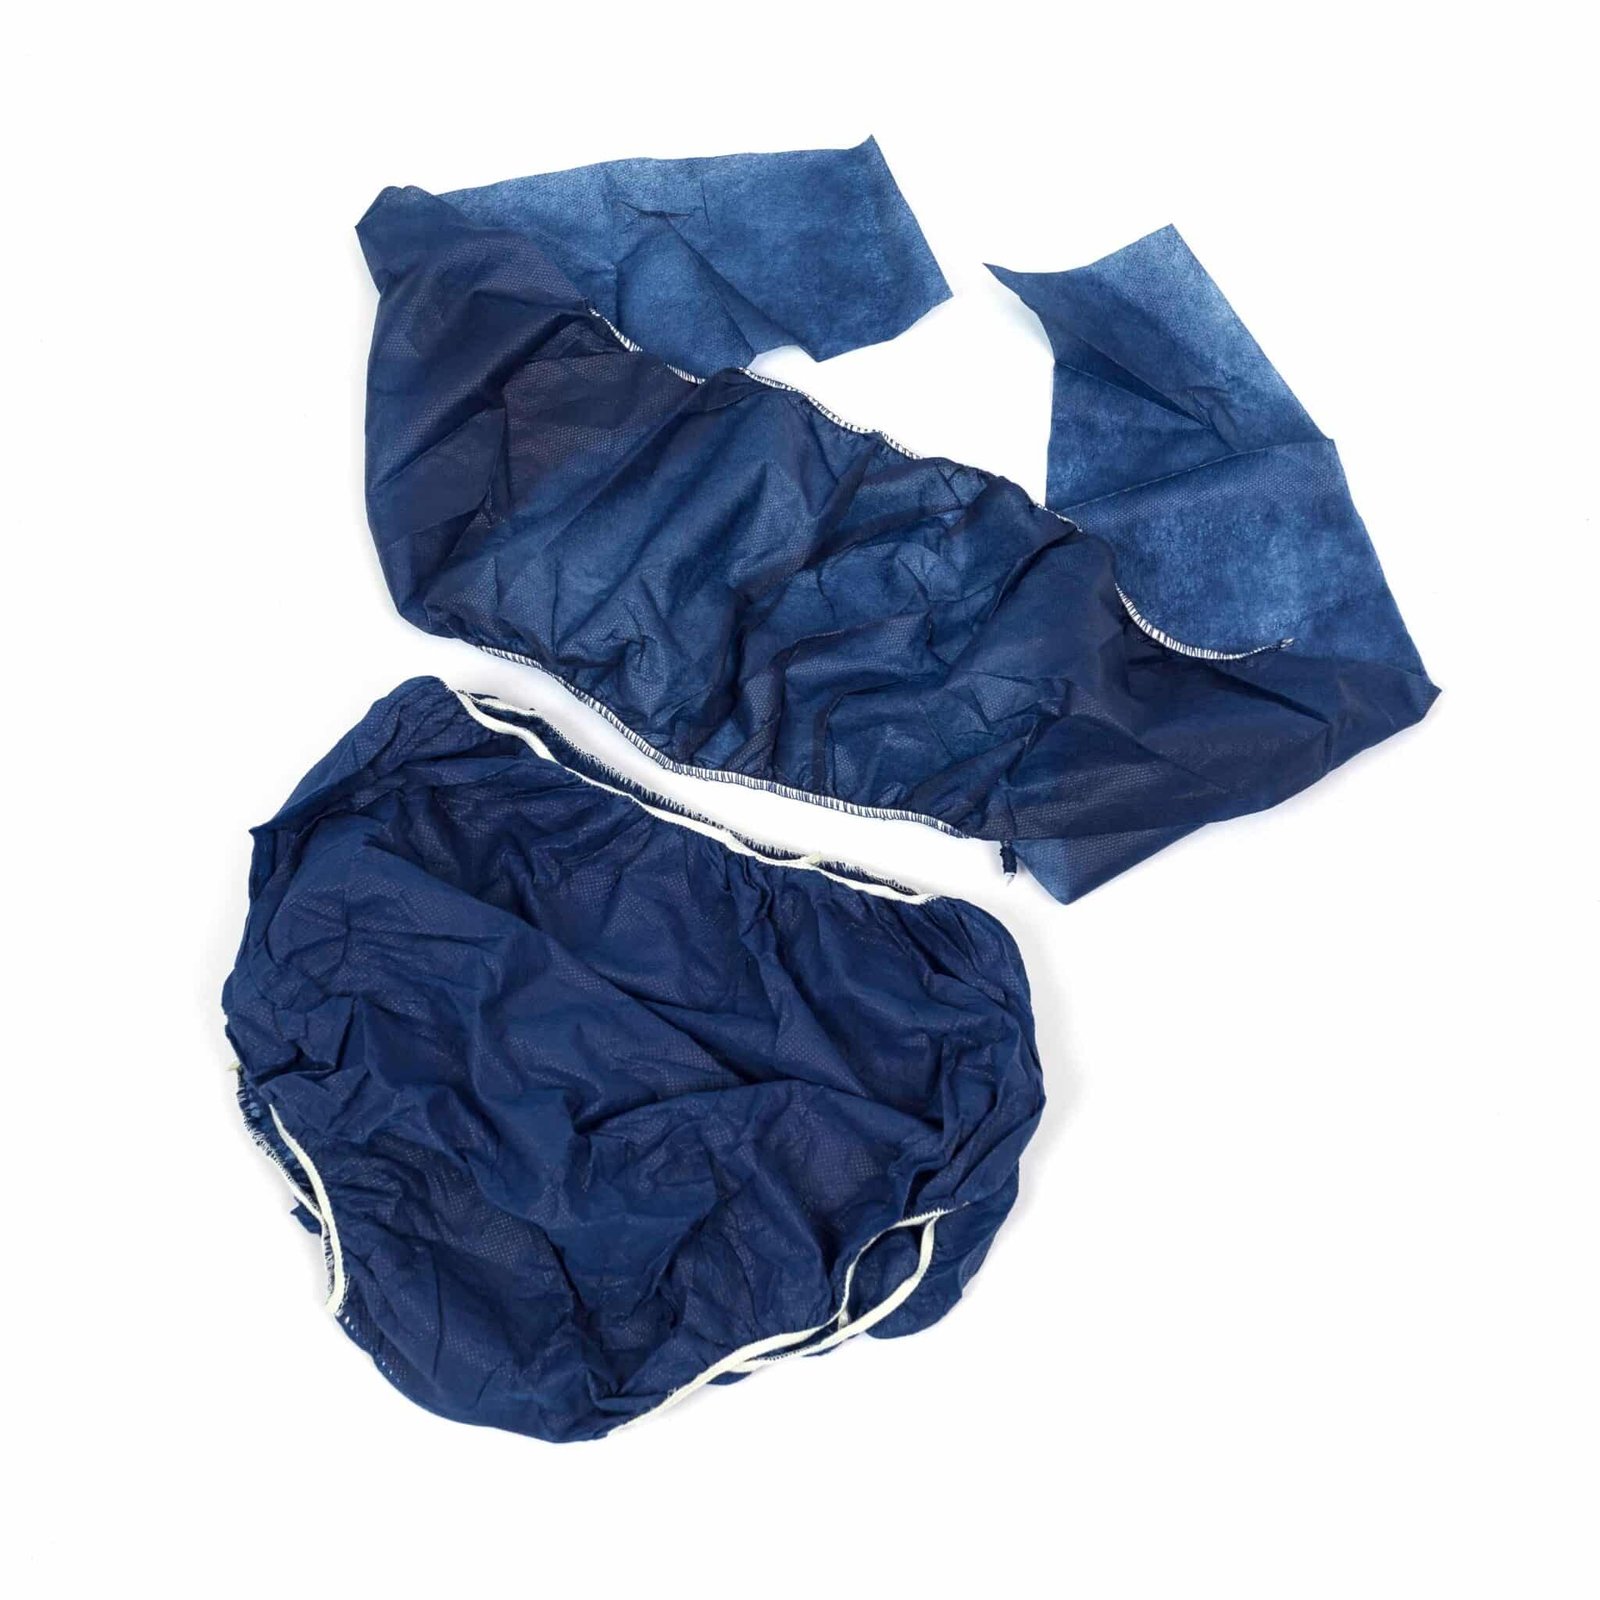 Disposable Underwear, 20pcs Non Woven Unisex SPA Macao